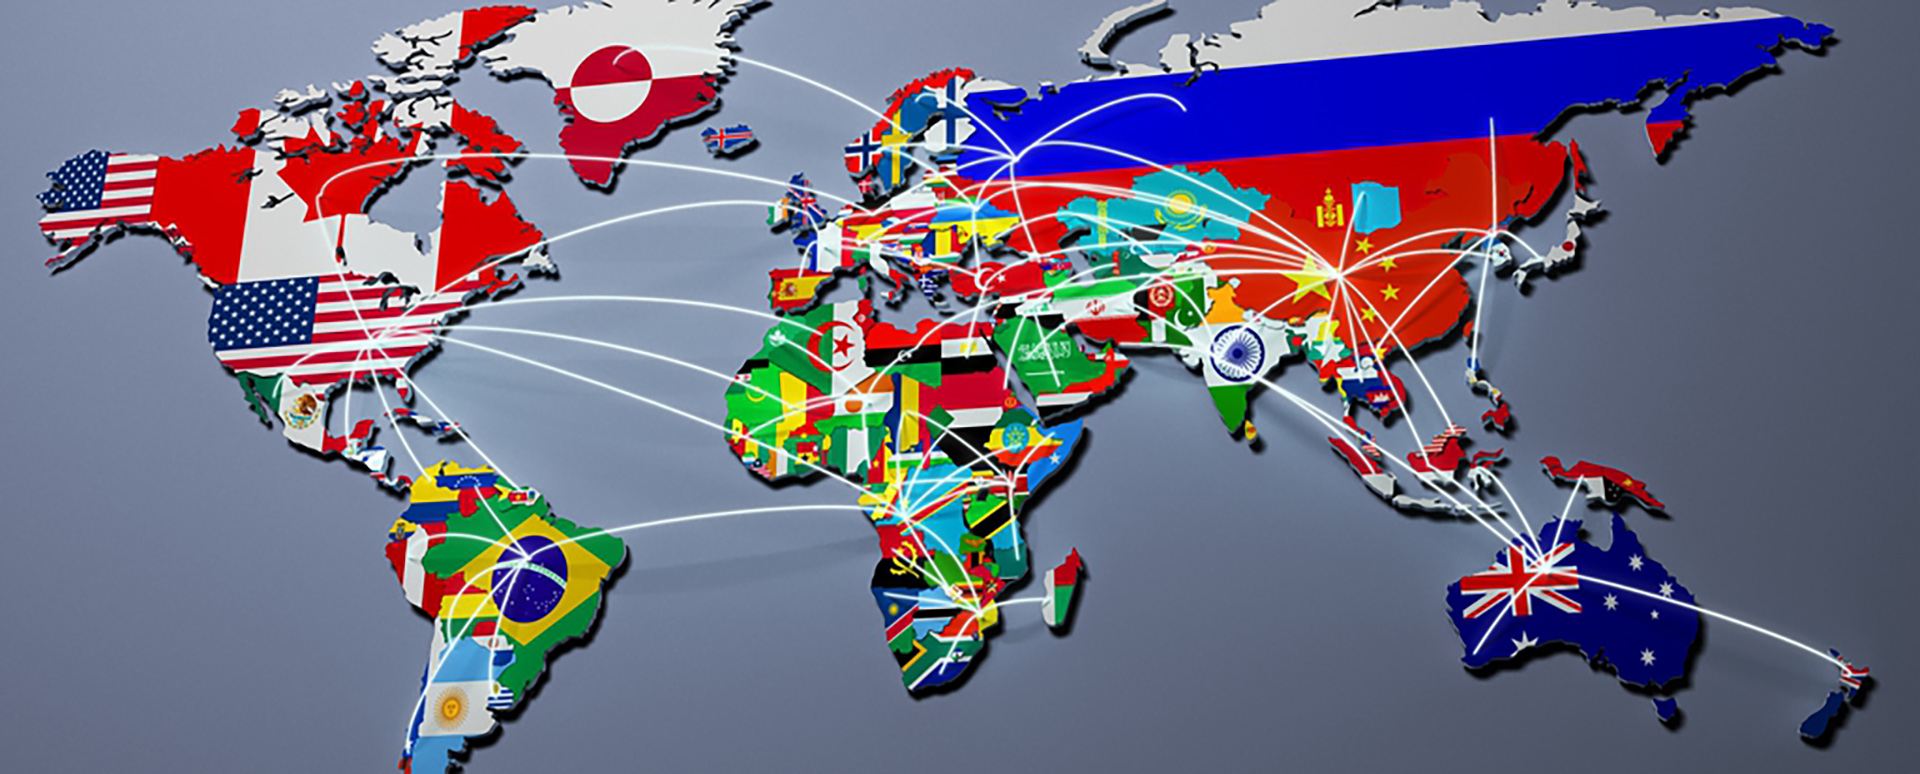 Online αγορές στον κόσμο Τρισδιάστατη απόδοση του χάρτη.Shutterstock ID 515527915;άλλα: -;παραγγελία_αγοράς: -;πελάτης: -;δουλειά: -